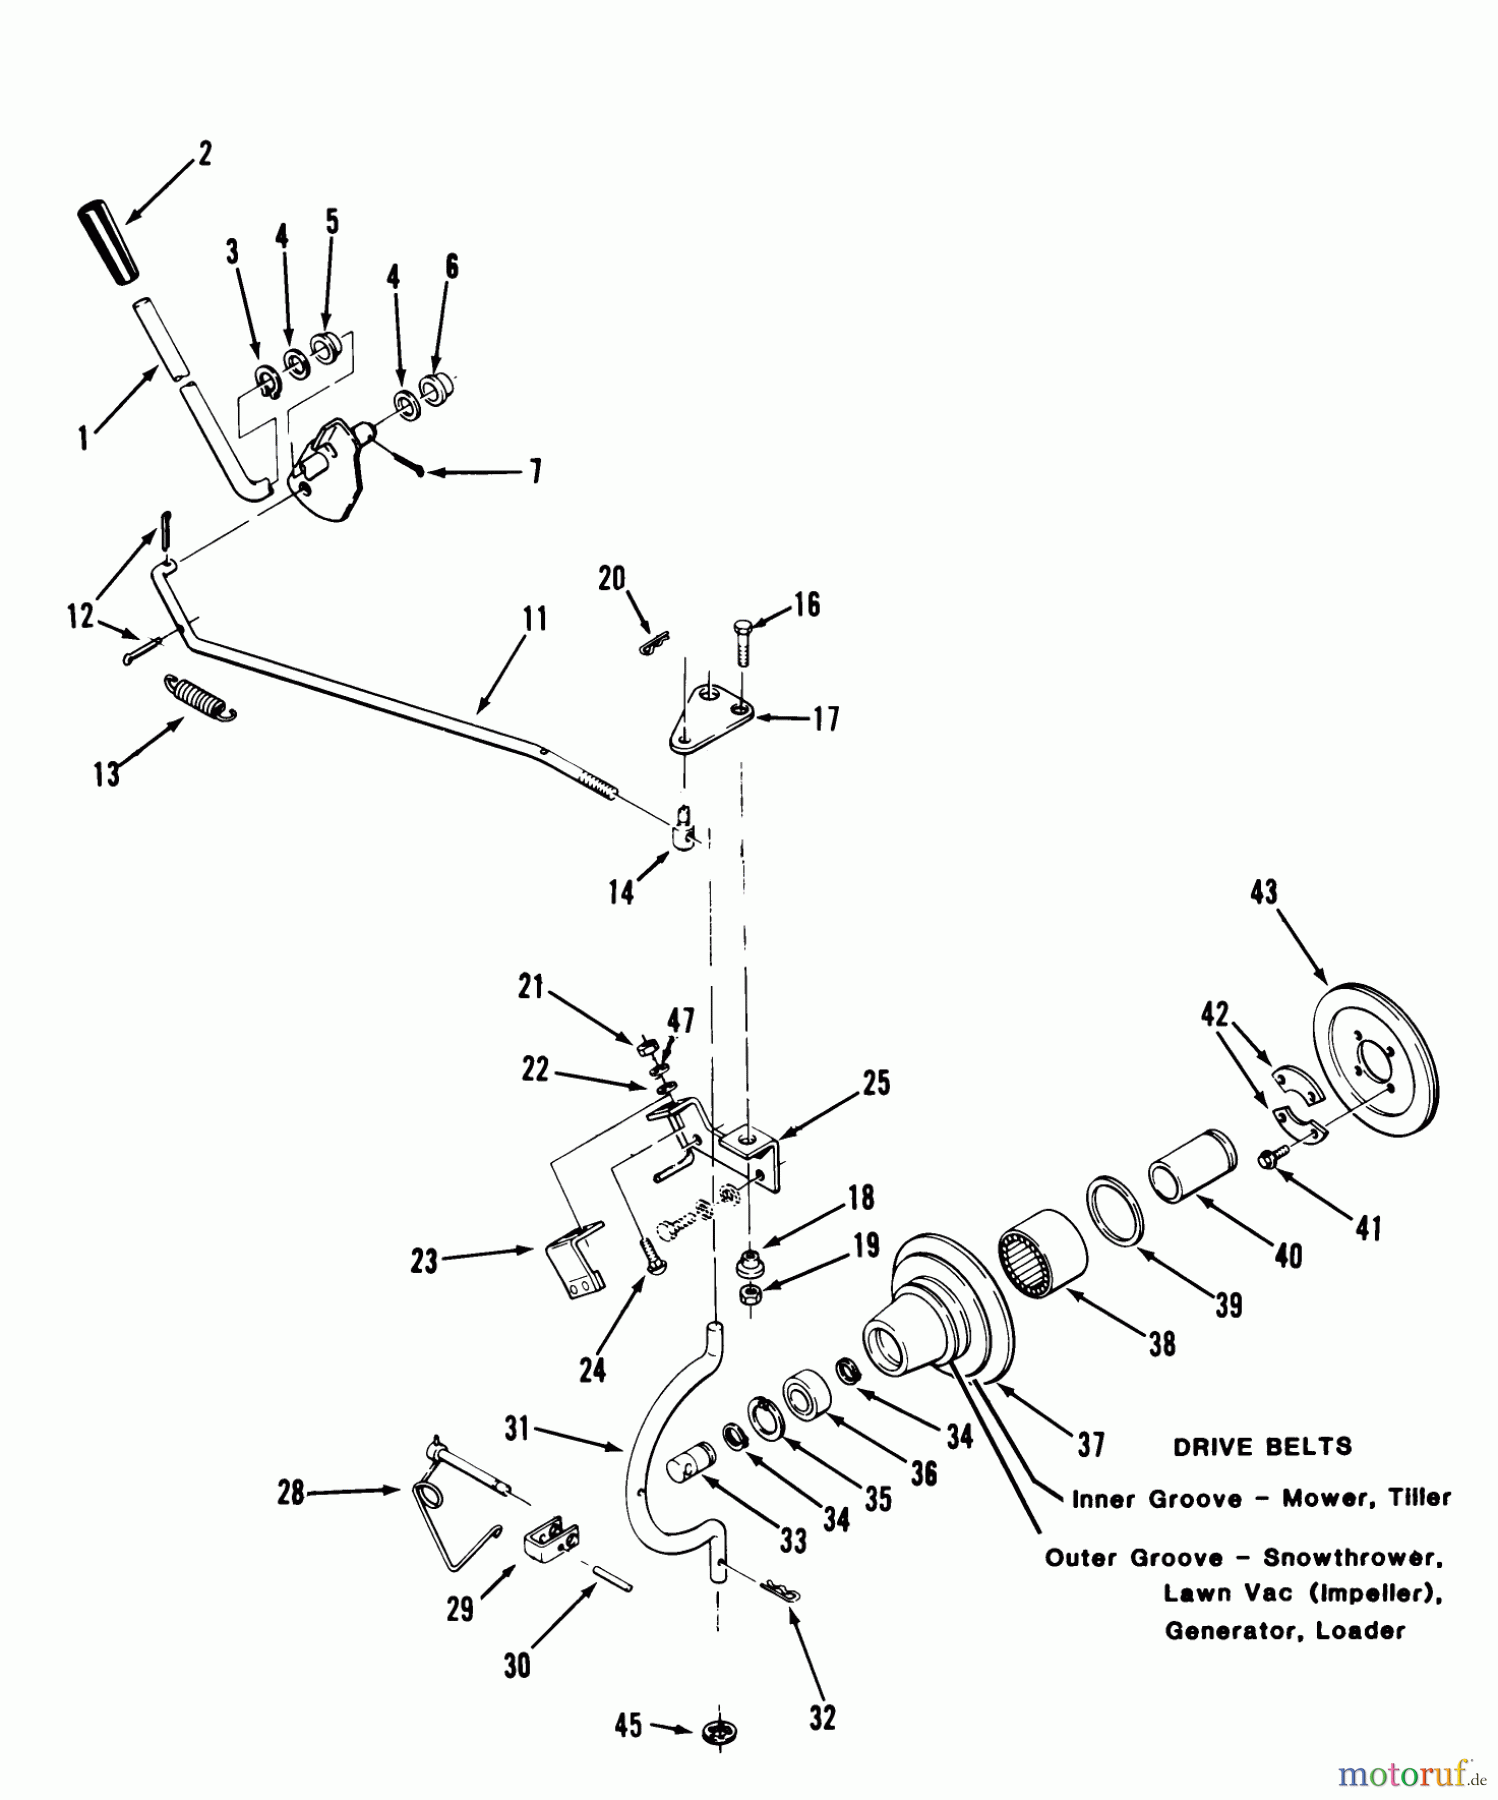  Toro Neu Mowers, Lawn & Garden Tractor Seite 1 31-20OE02 (520-H) - Toro 520-H Garden Tractor, 1989 PTO CLUTCH AND CONTROL